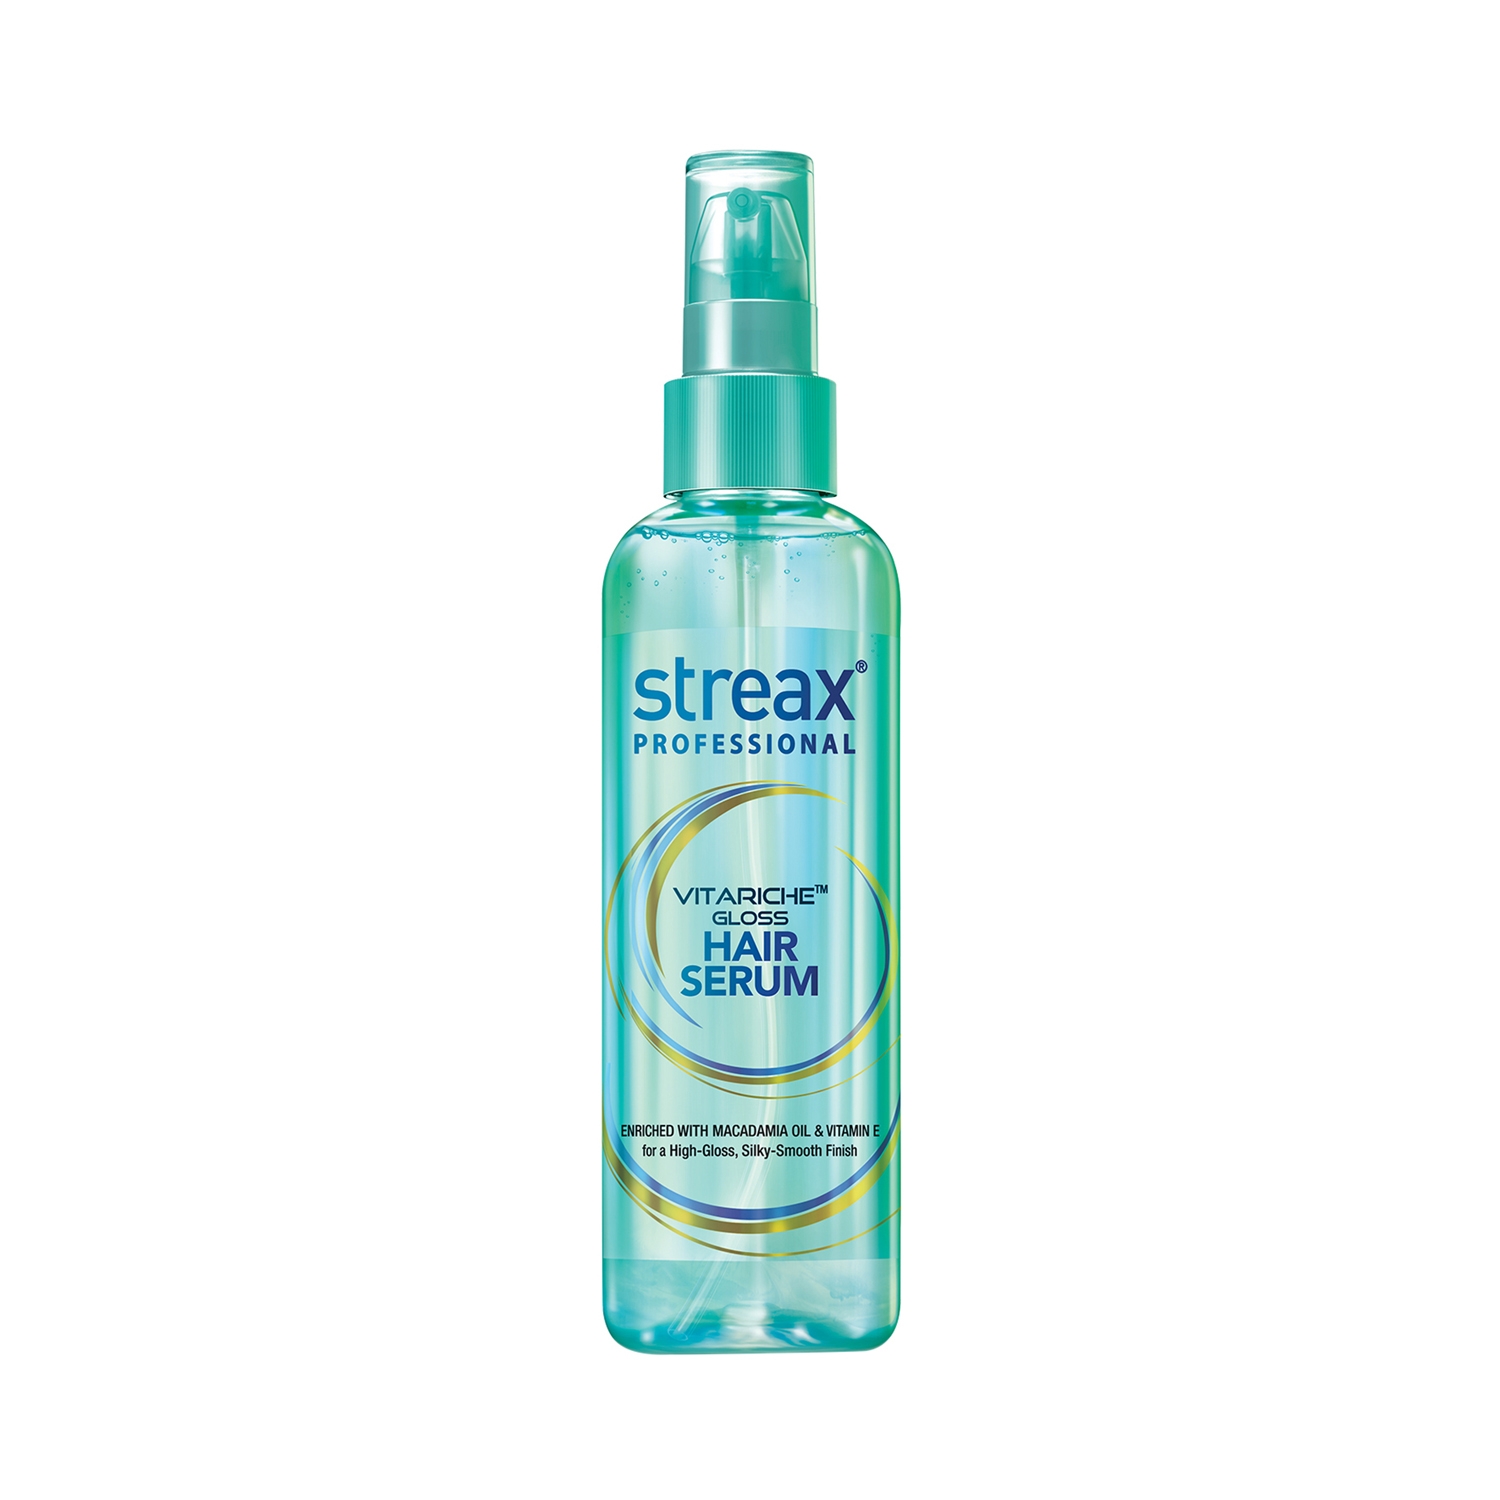 Streax Professional | Streax Professional Vitarich Gloss Hair Serum (115ml)